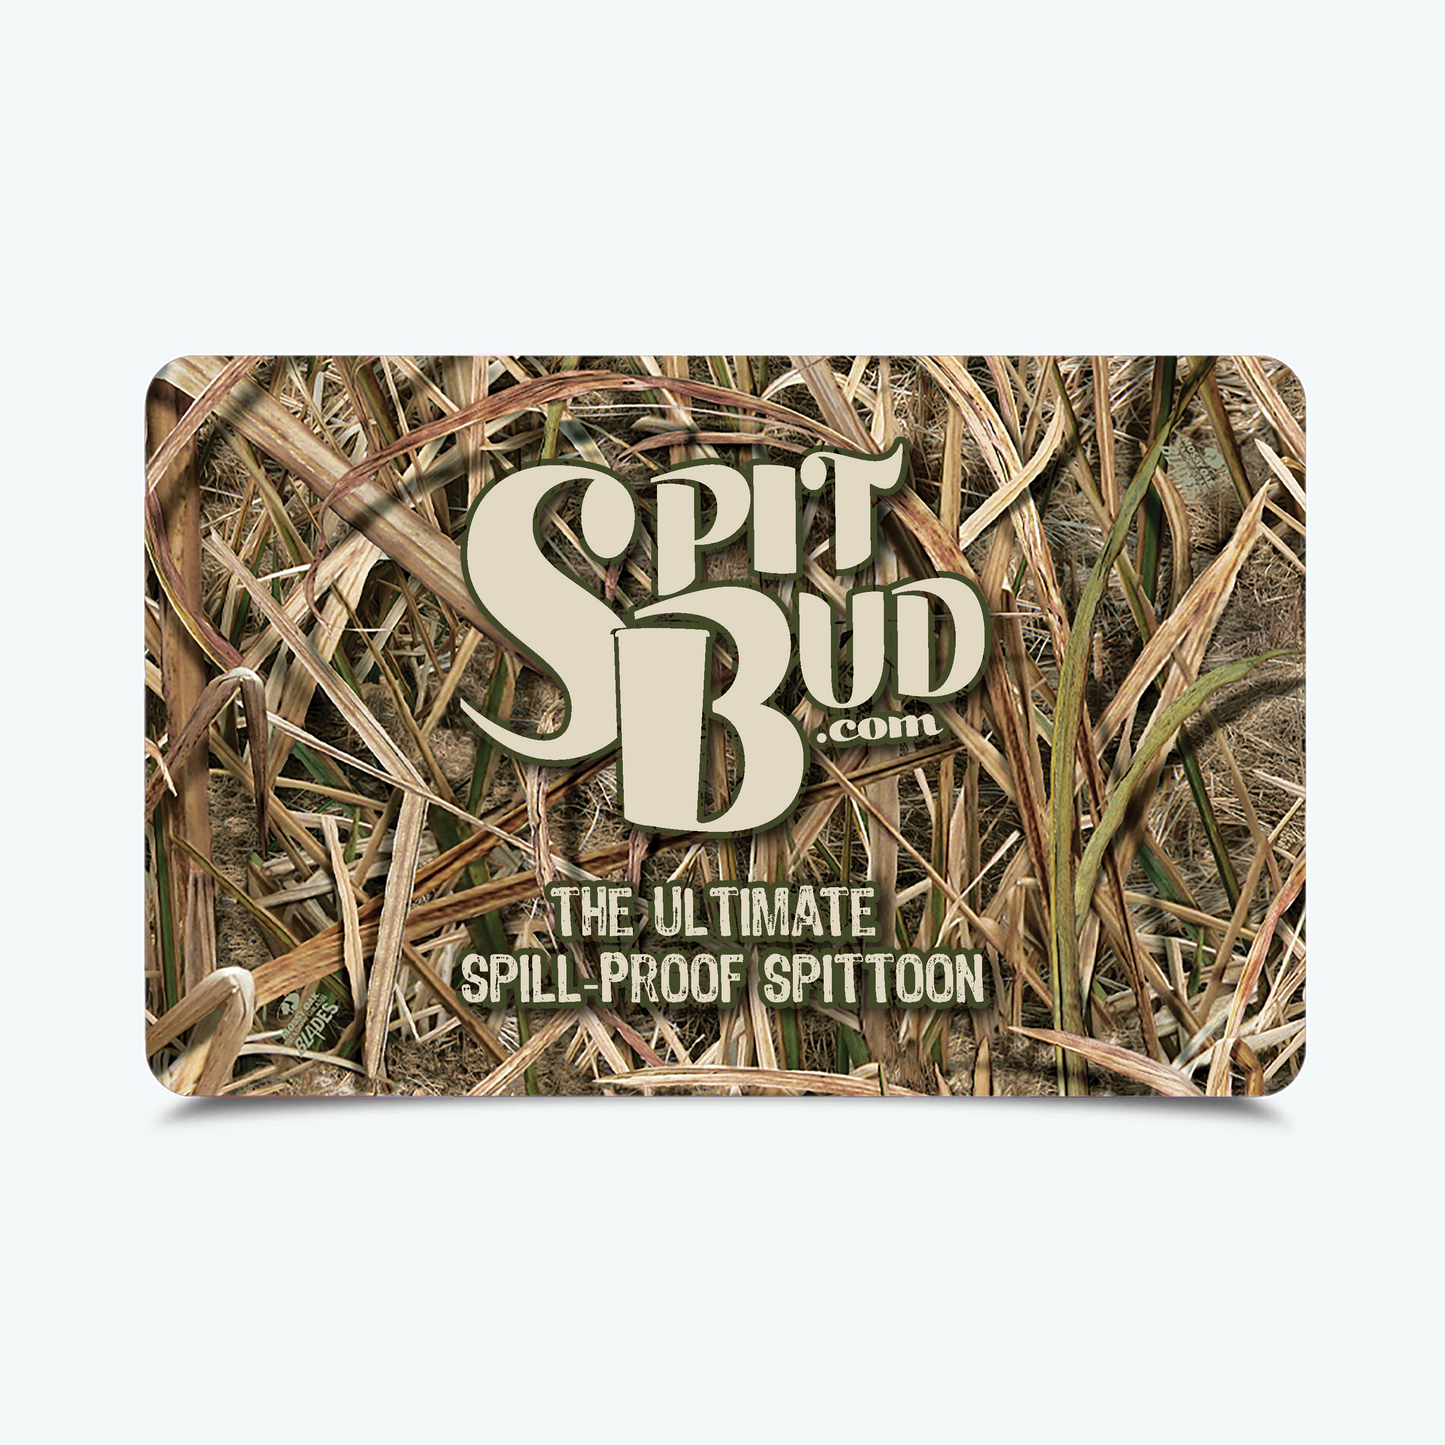 Spitbud Gift Cards